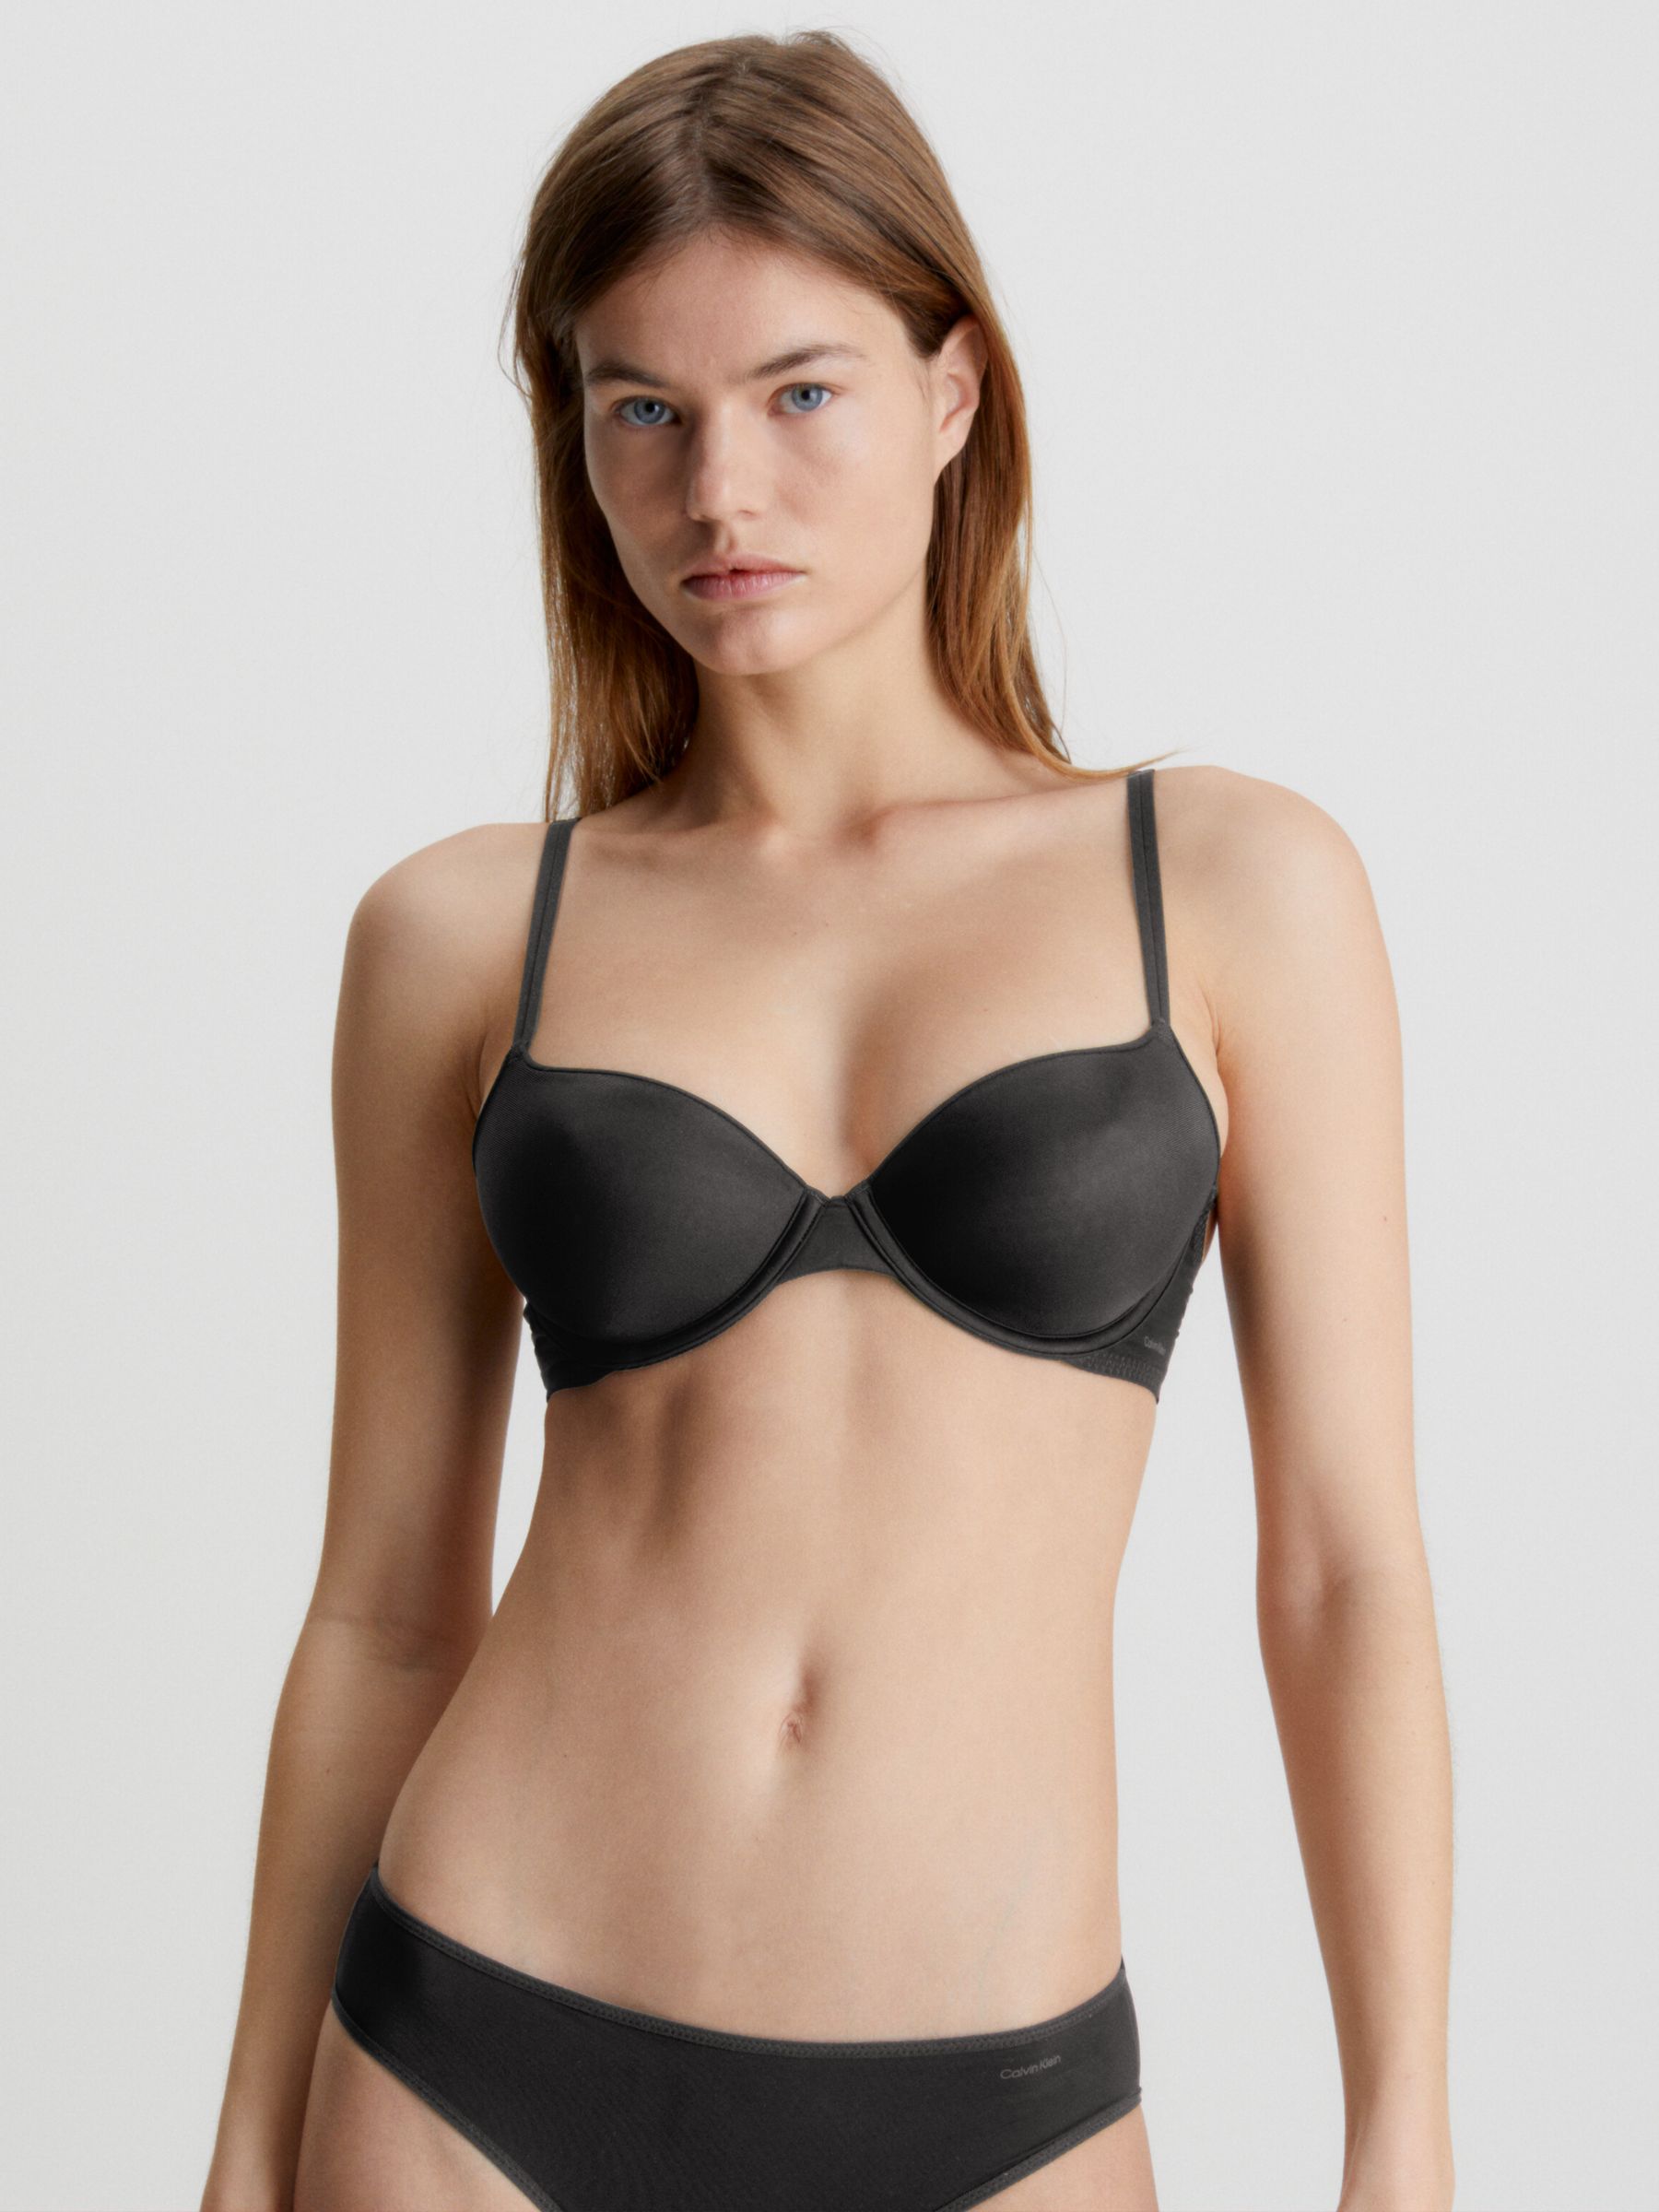 Calvin Klein sheer bra size 34D